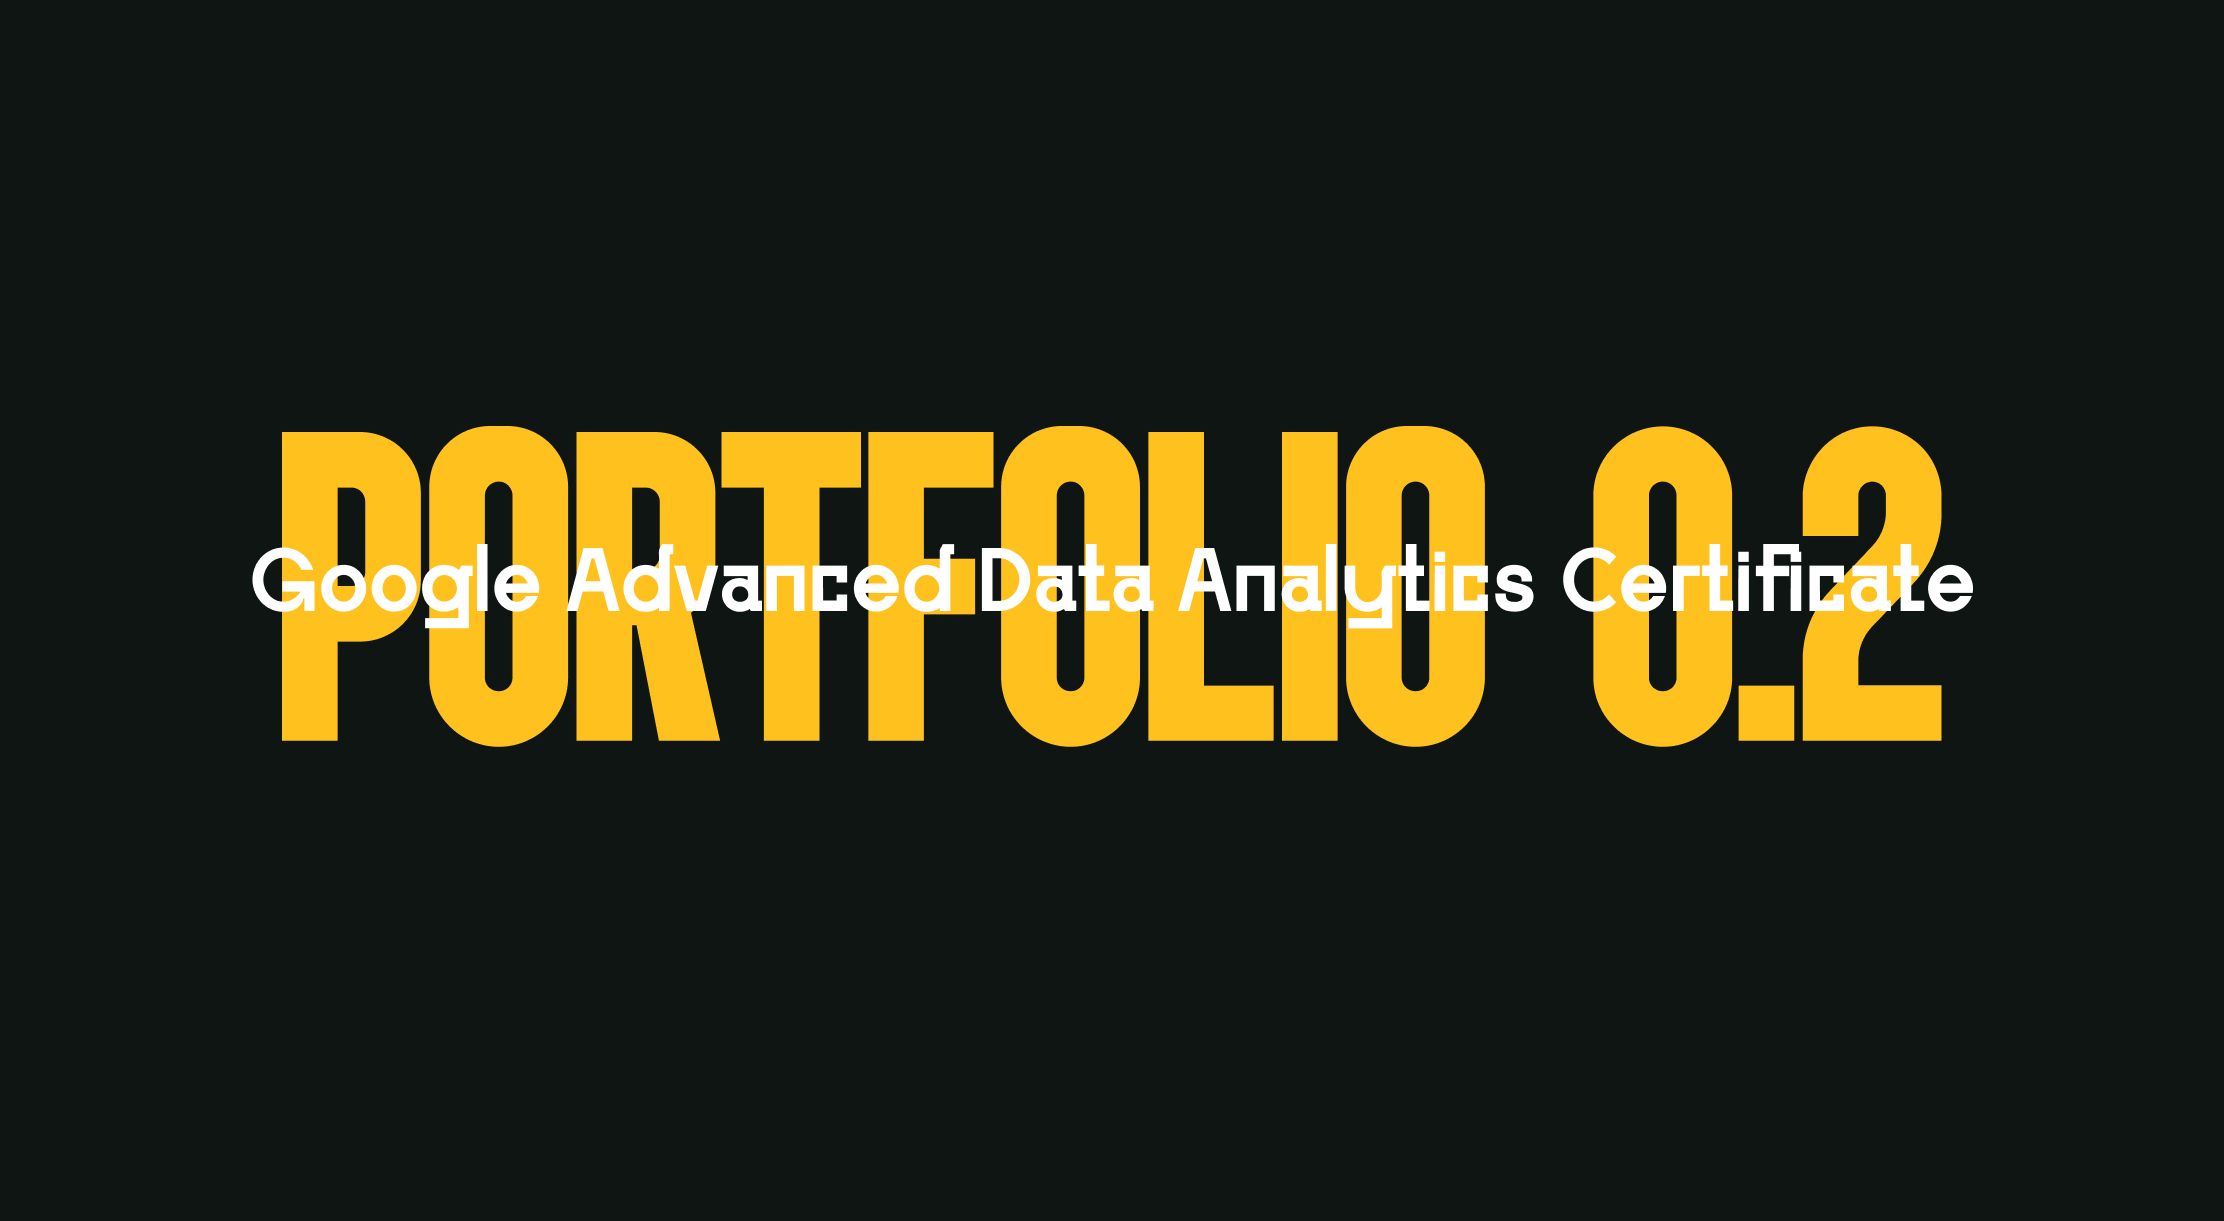 Portfolio module 2 {Get Started with Python} Google Advanced Data Analytics Certificate